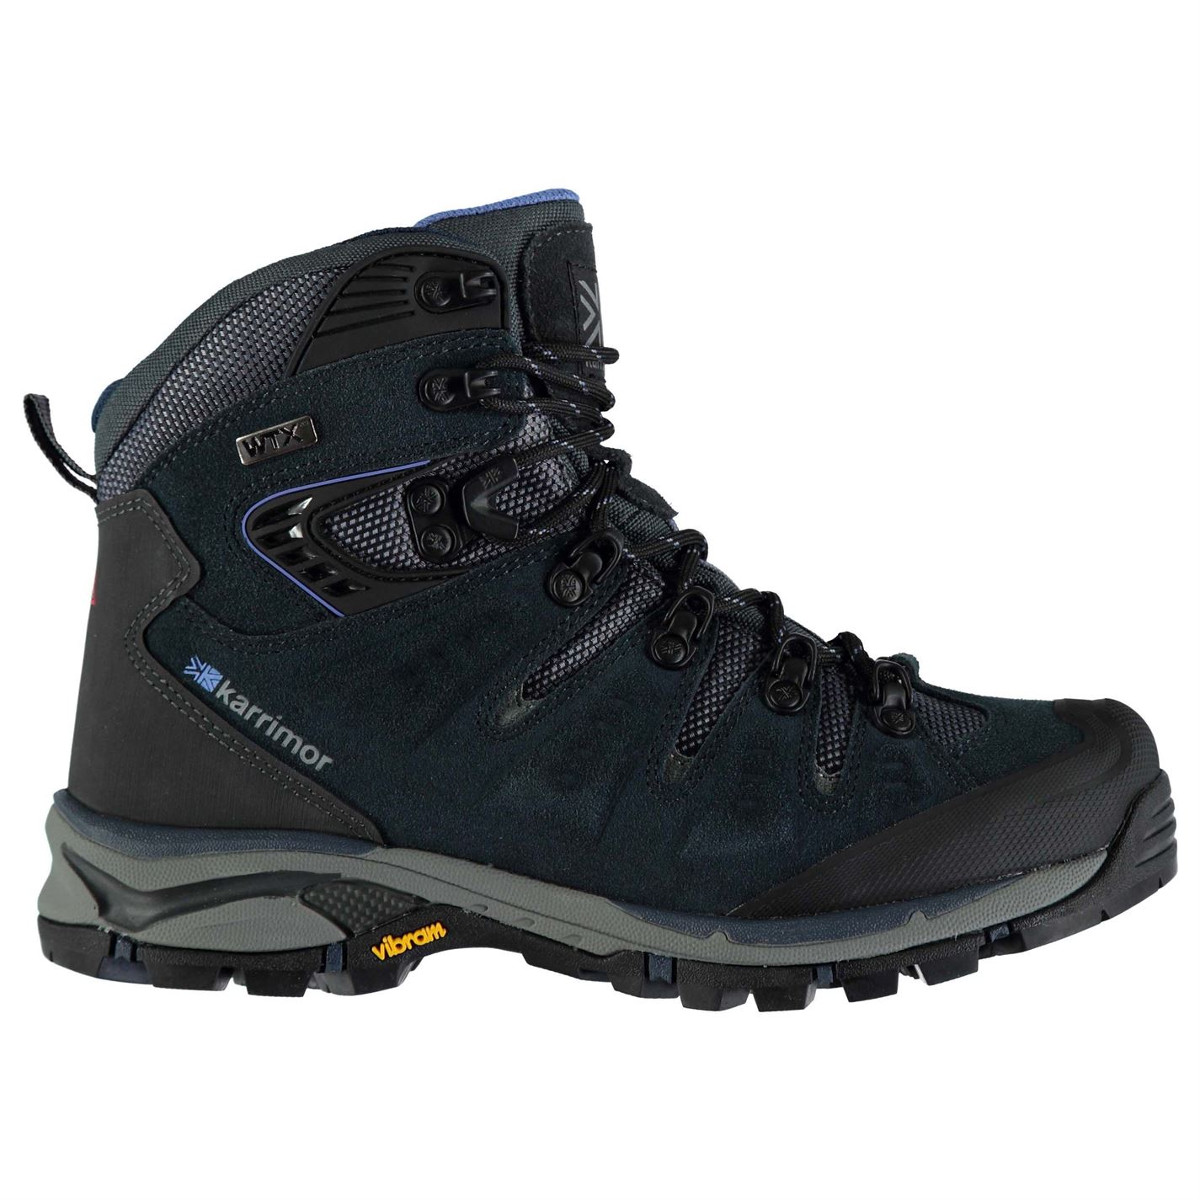 Karrimor Women's Leopard Waterproof Mid Hiking Boots - Black, 8